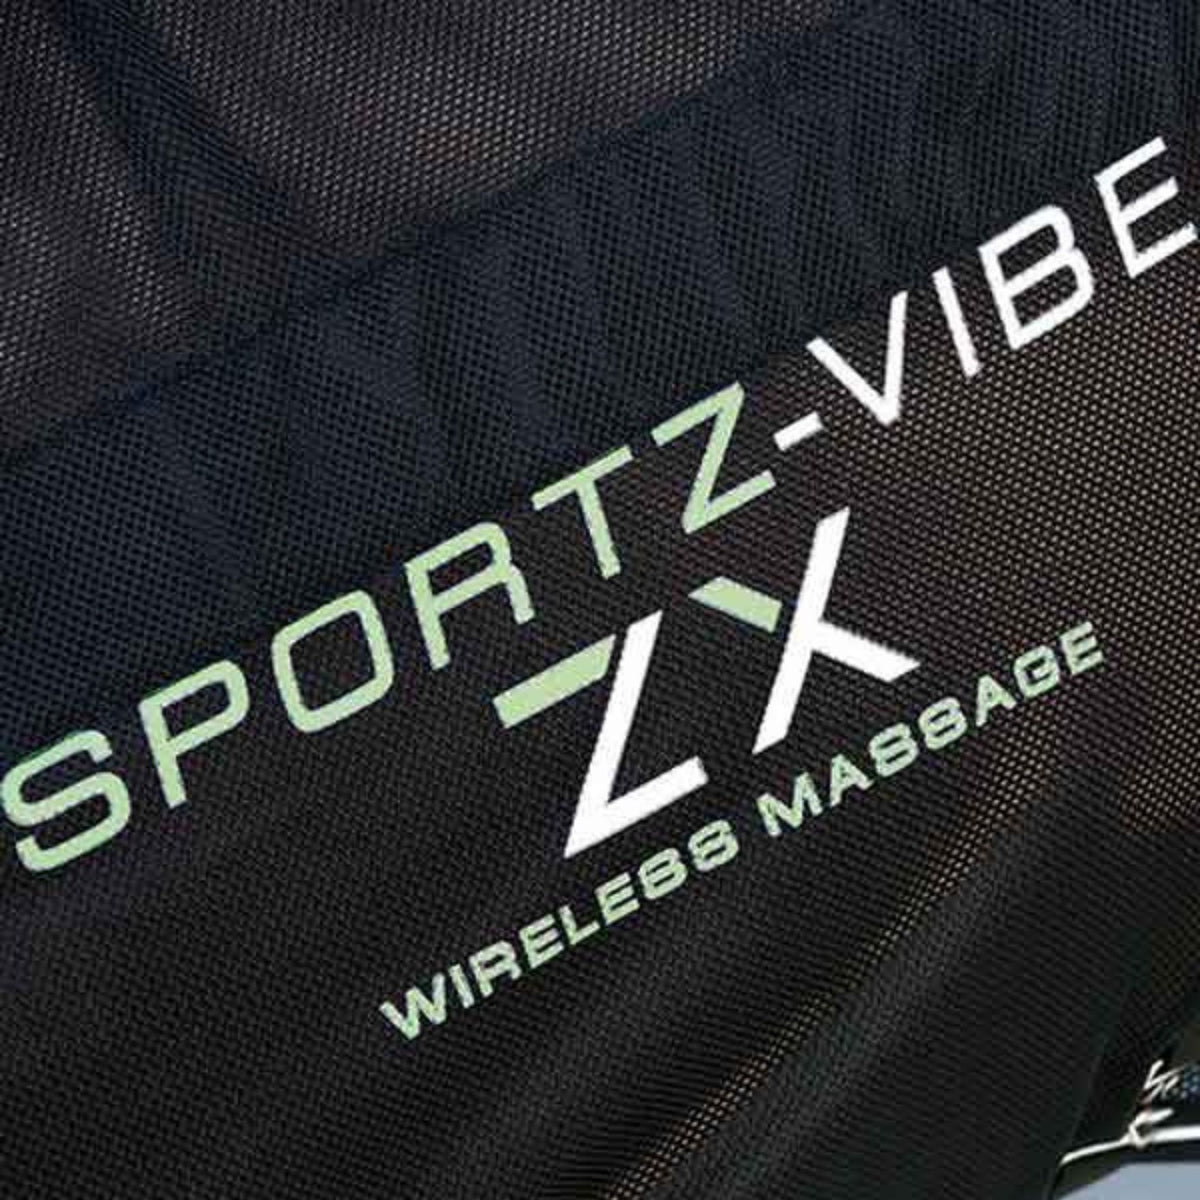 Green and white SPORTZ-VIBE ZX WIRELESS MASSAGE logo.